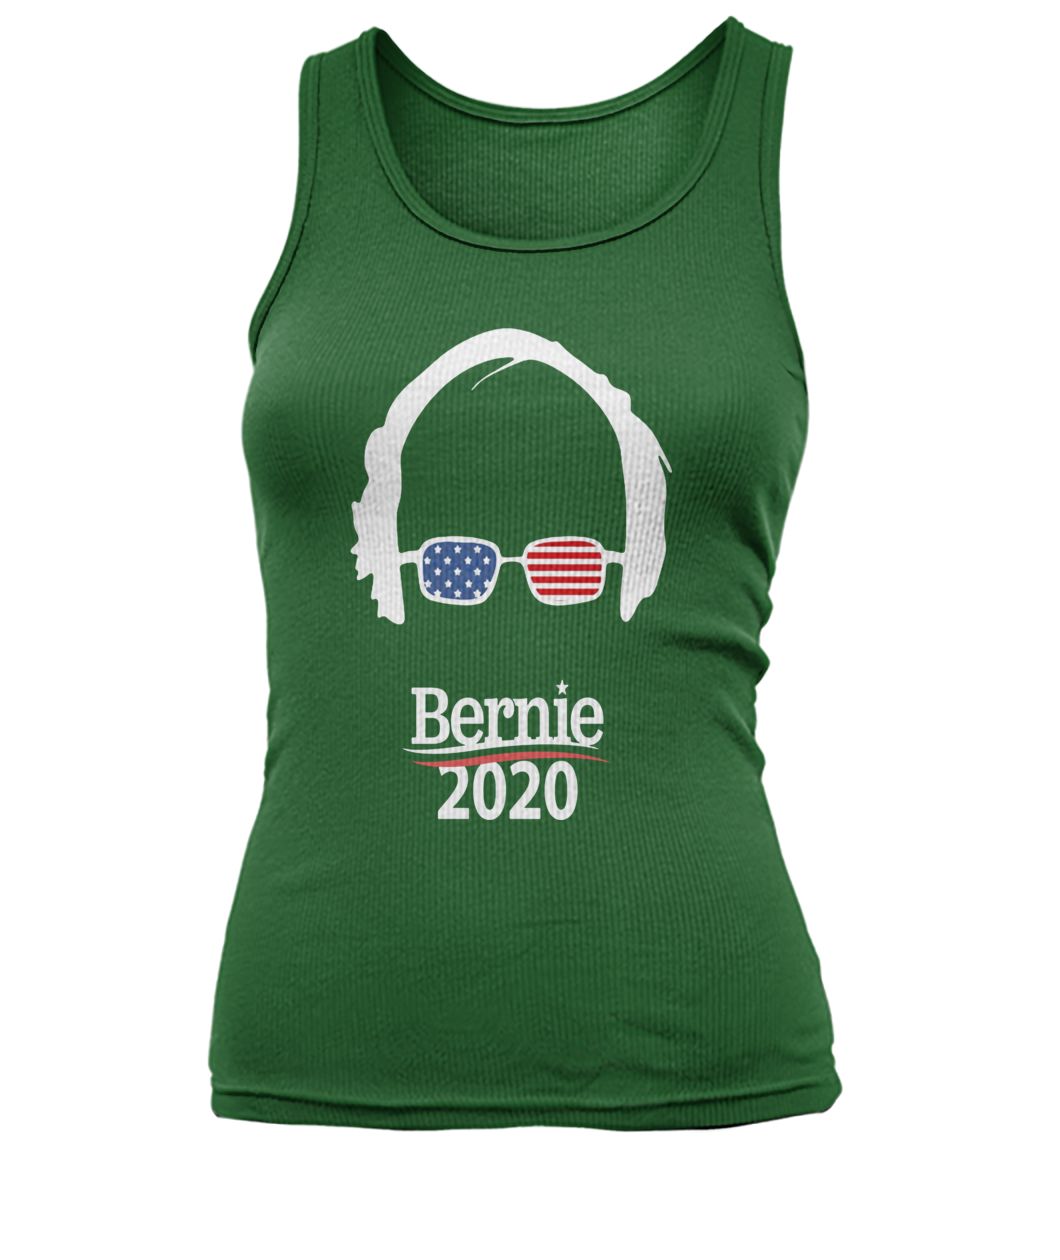 Bernie sanders 2020 women's tank top